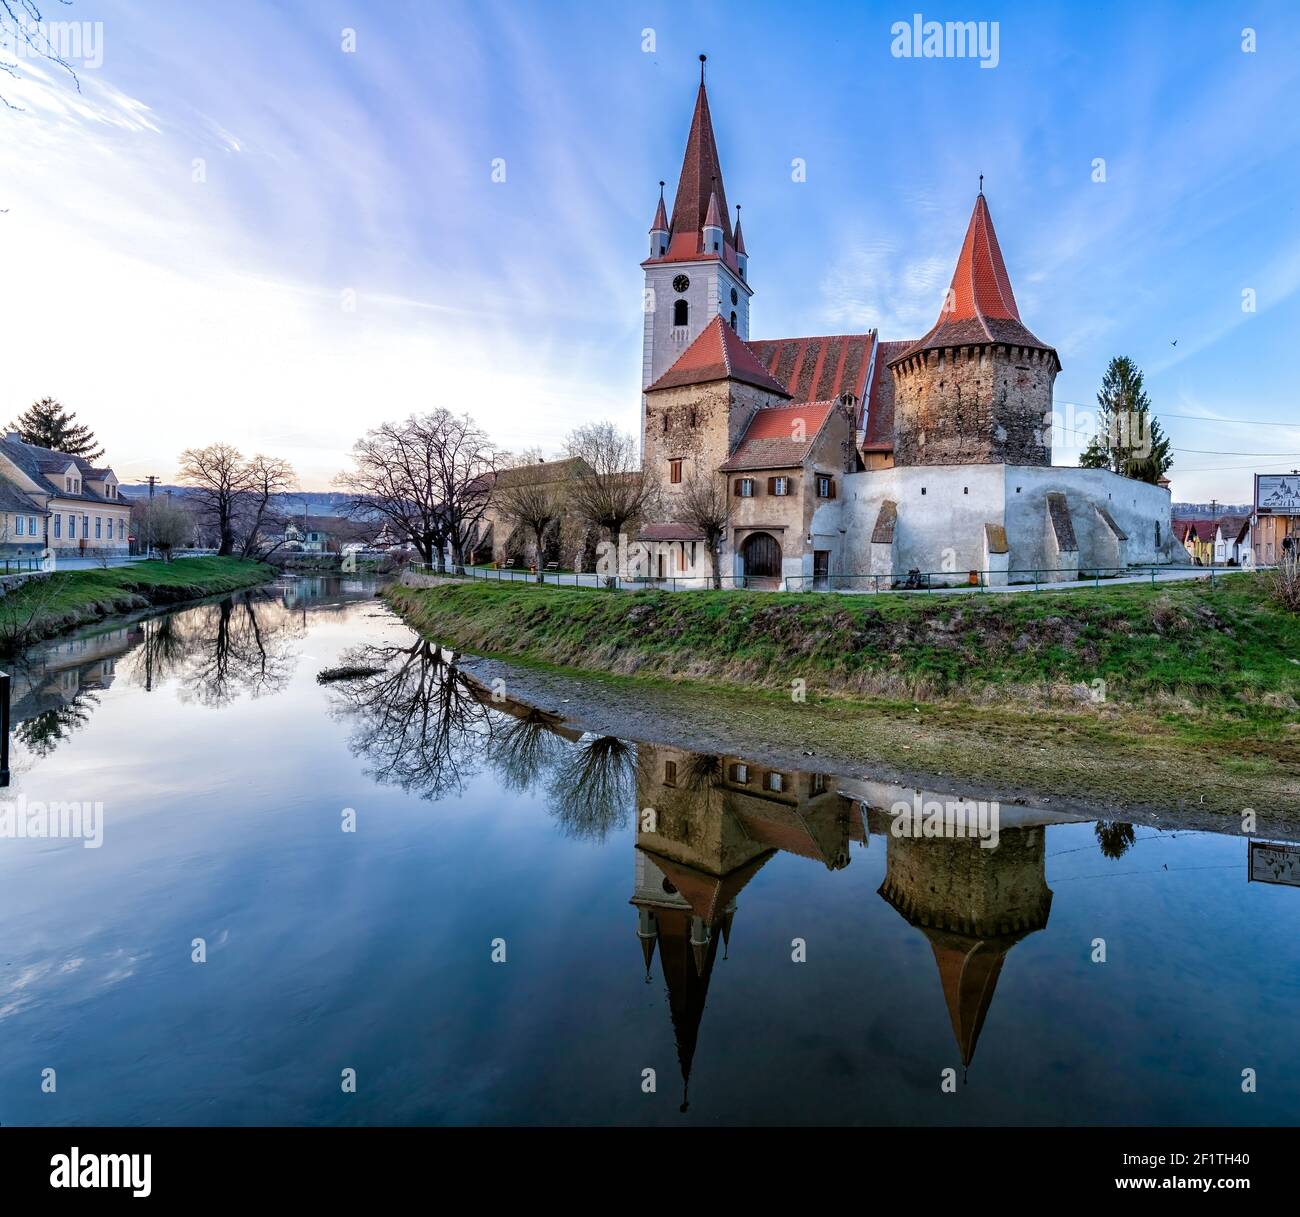 Chiesa fortificata di Cristian da Sibiu Hermannstadt. Transilvania, Romania, Chiesa medievale riflessione in acqua. Architettura medievale Foto Stock